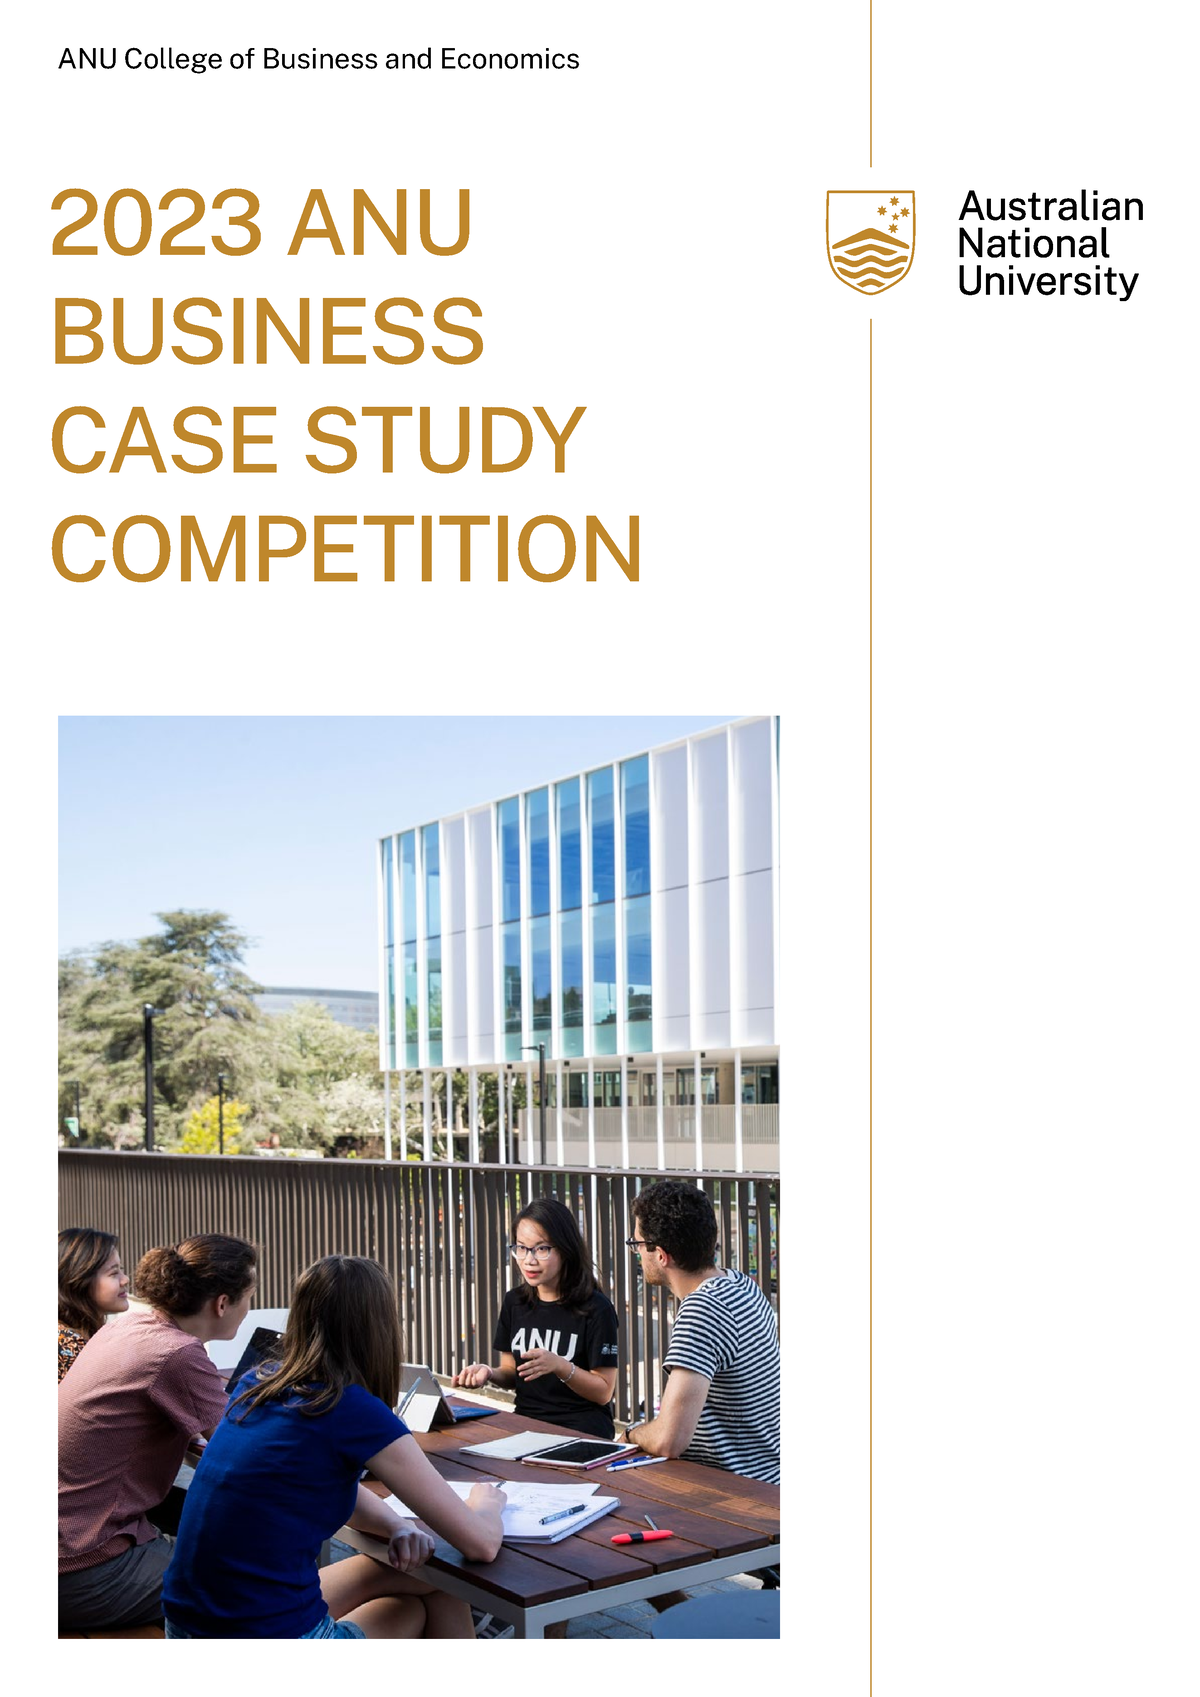 anu international business plan competition